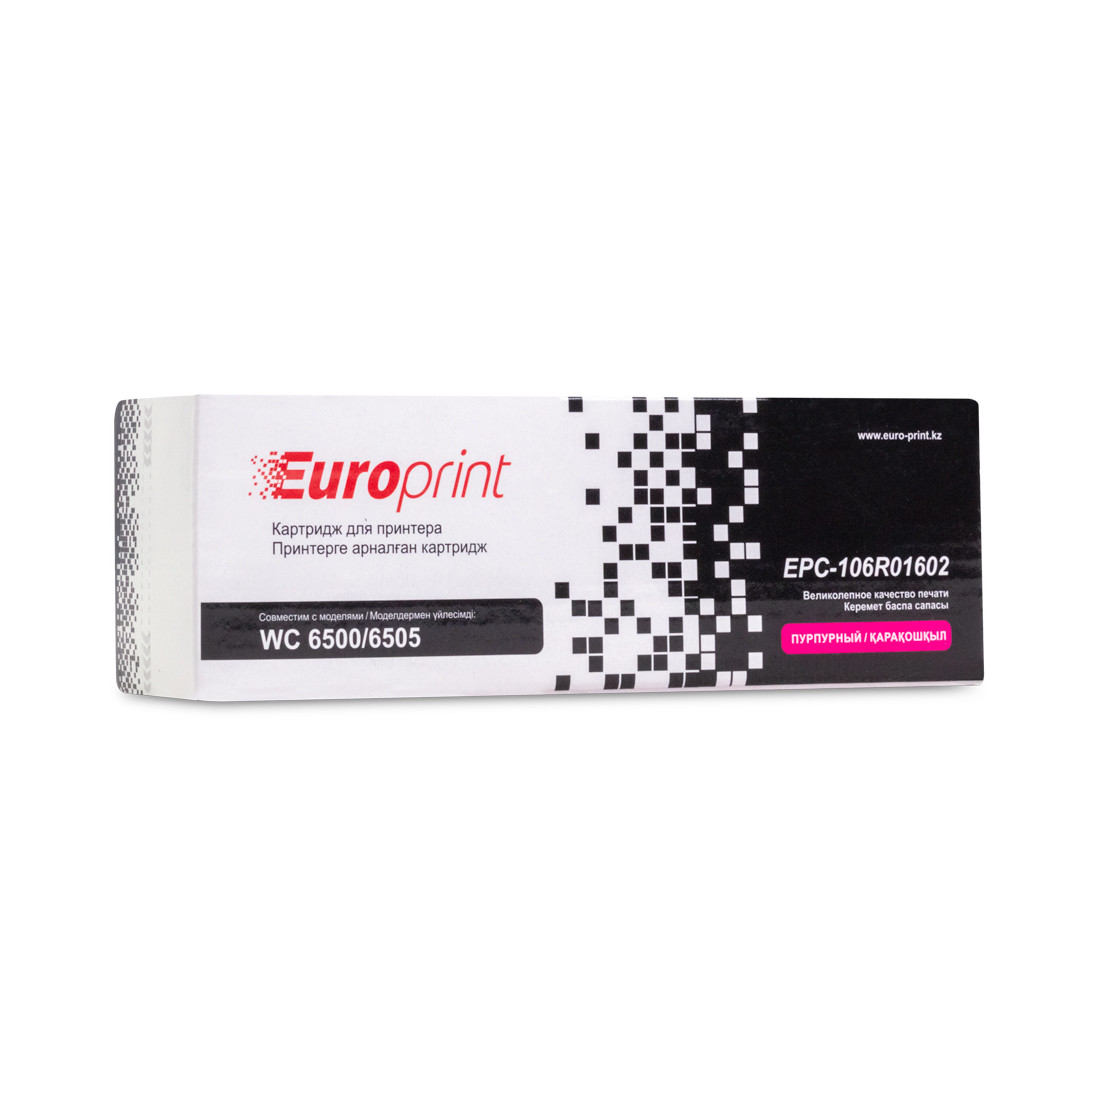 Тонер-картридж,(Пурпурный) Europrint, EPC-106R01602, Для принтеров Xerox WC 6500/6505, 2500 страниц.